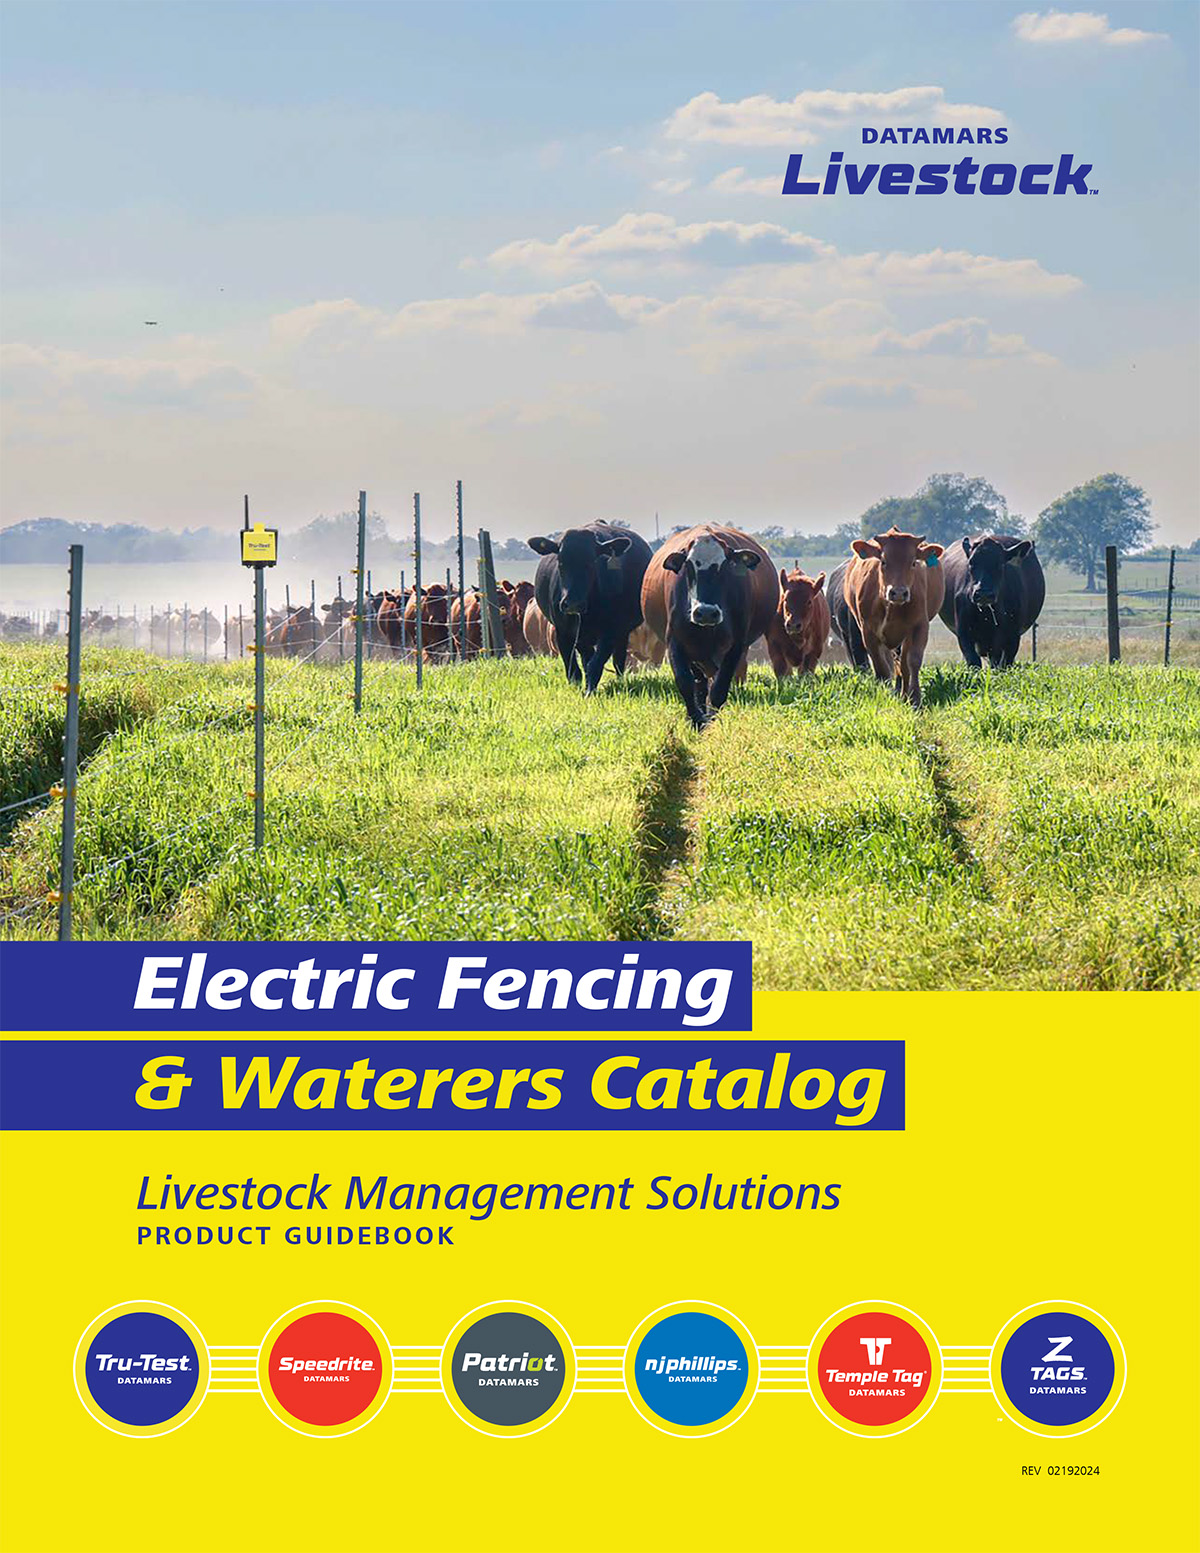 Datamars: Electric-Fencing - Waterers Product Guidebook Catalog